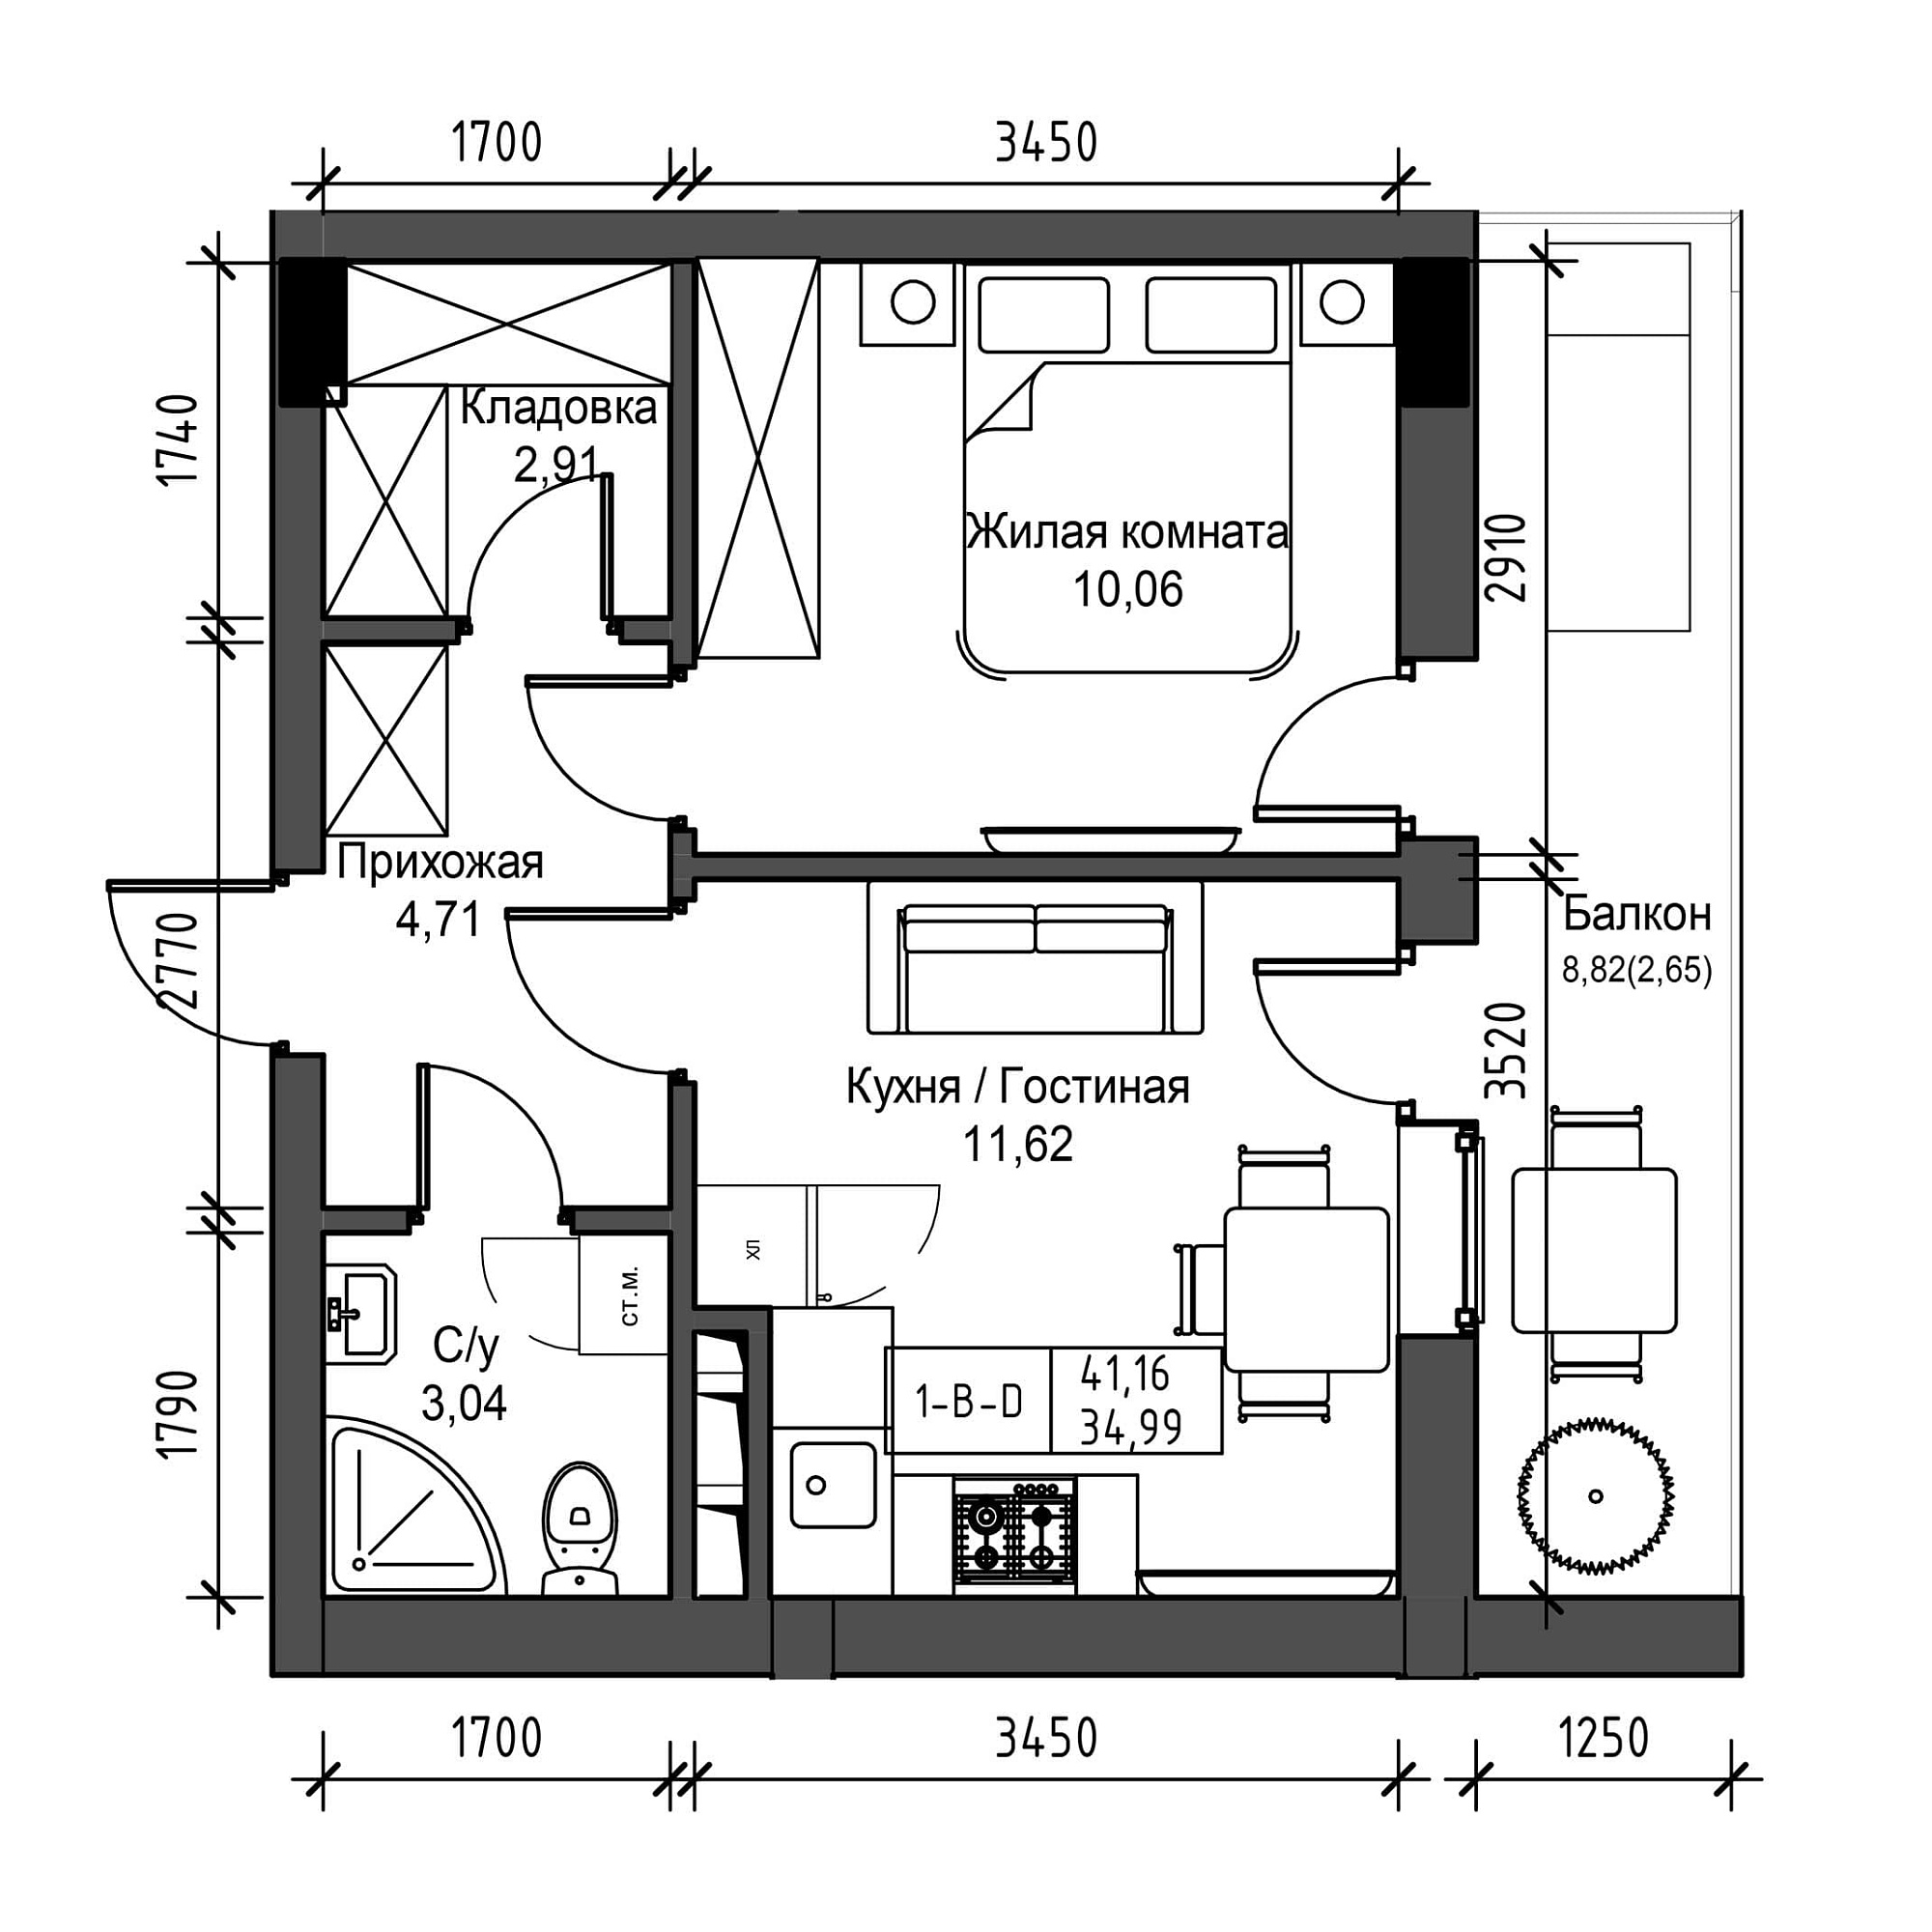 Planning 1-rm flats area 34.99m2, UM-001-08/0024.